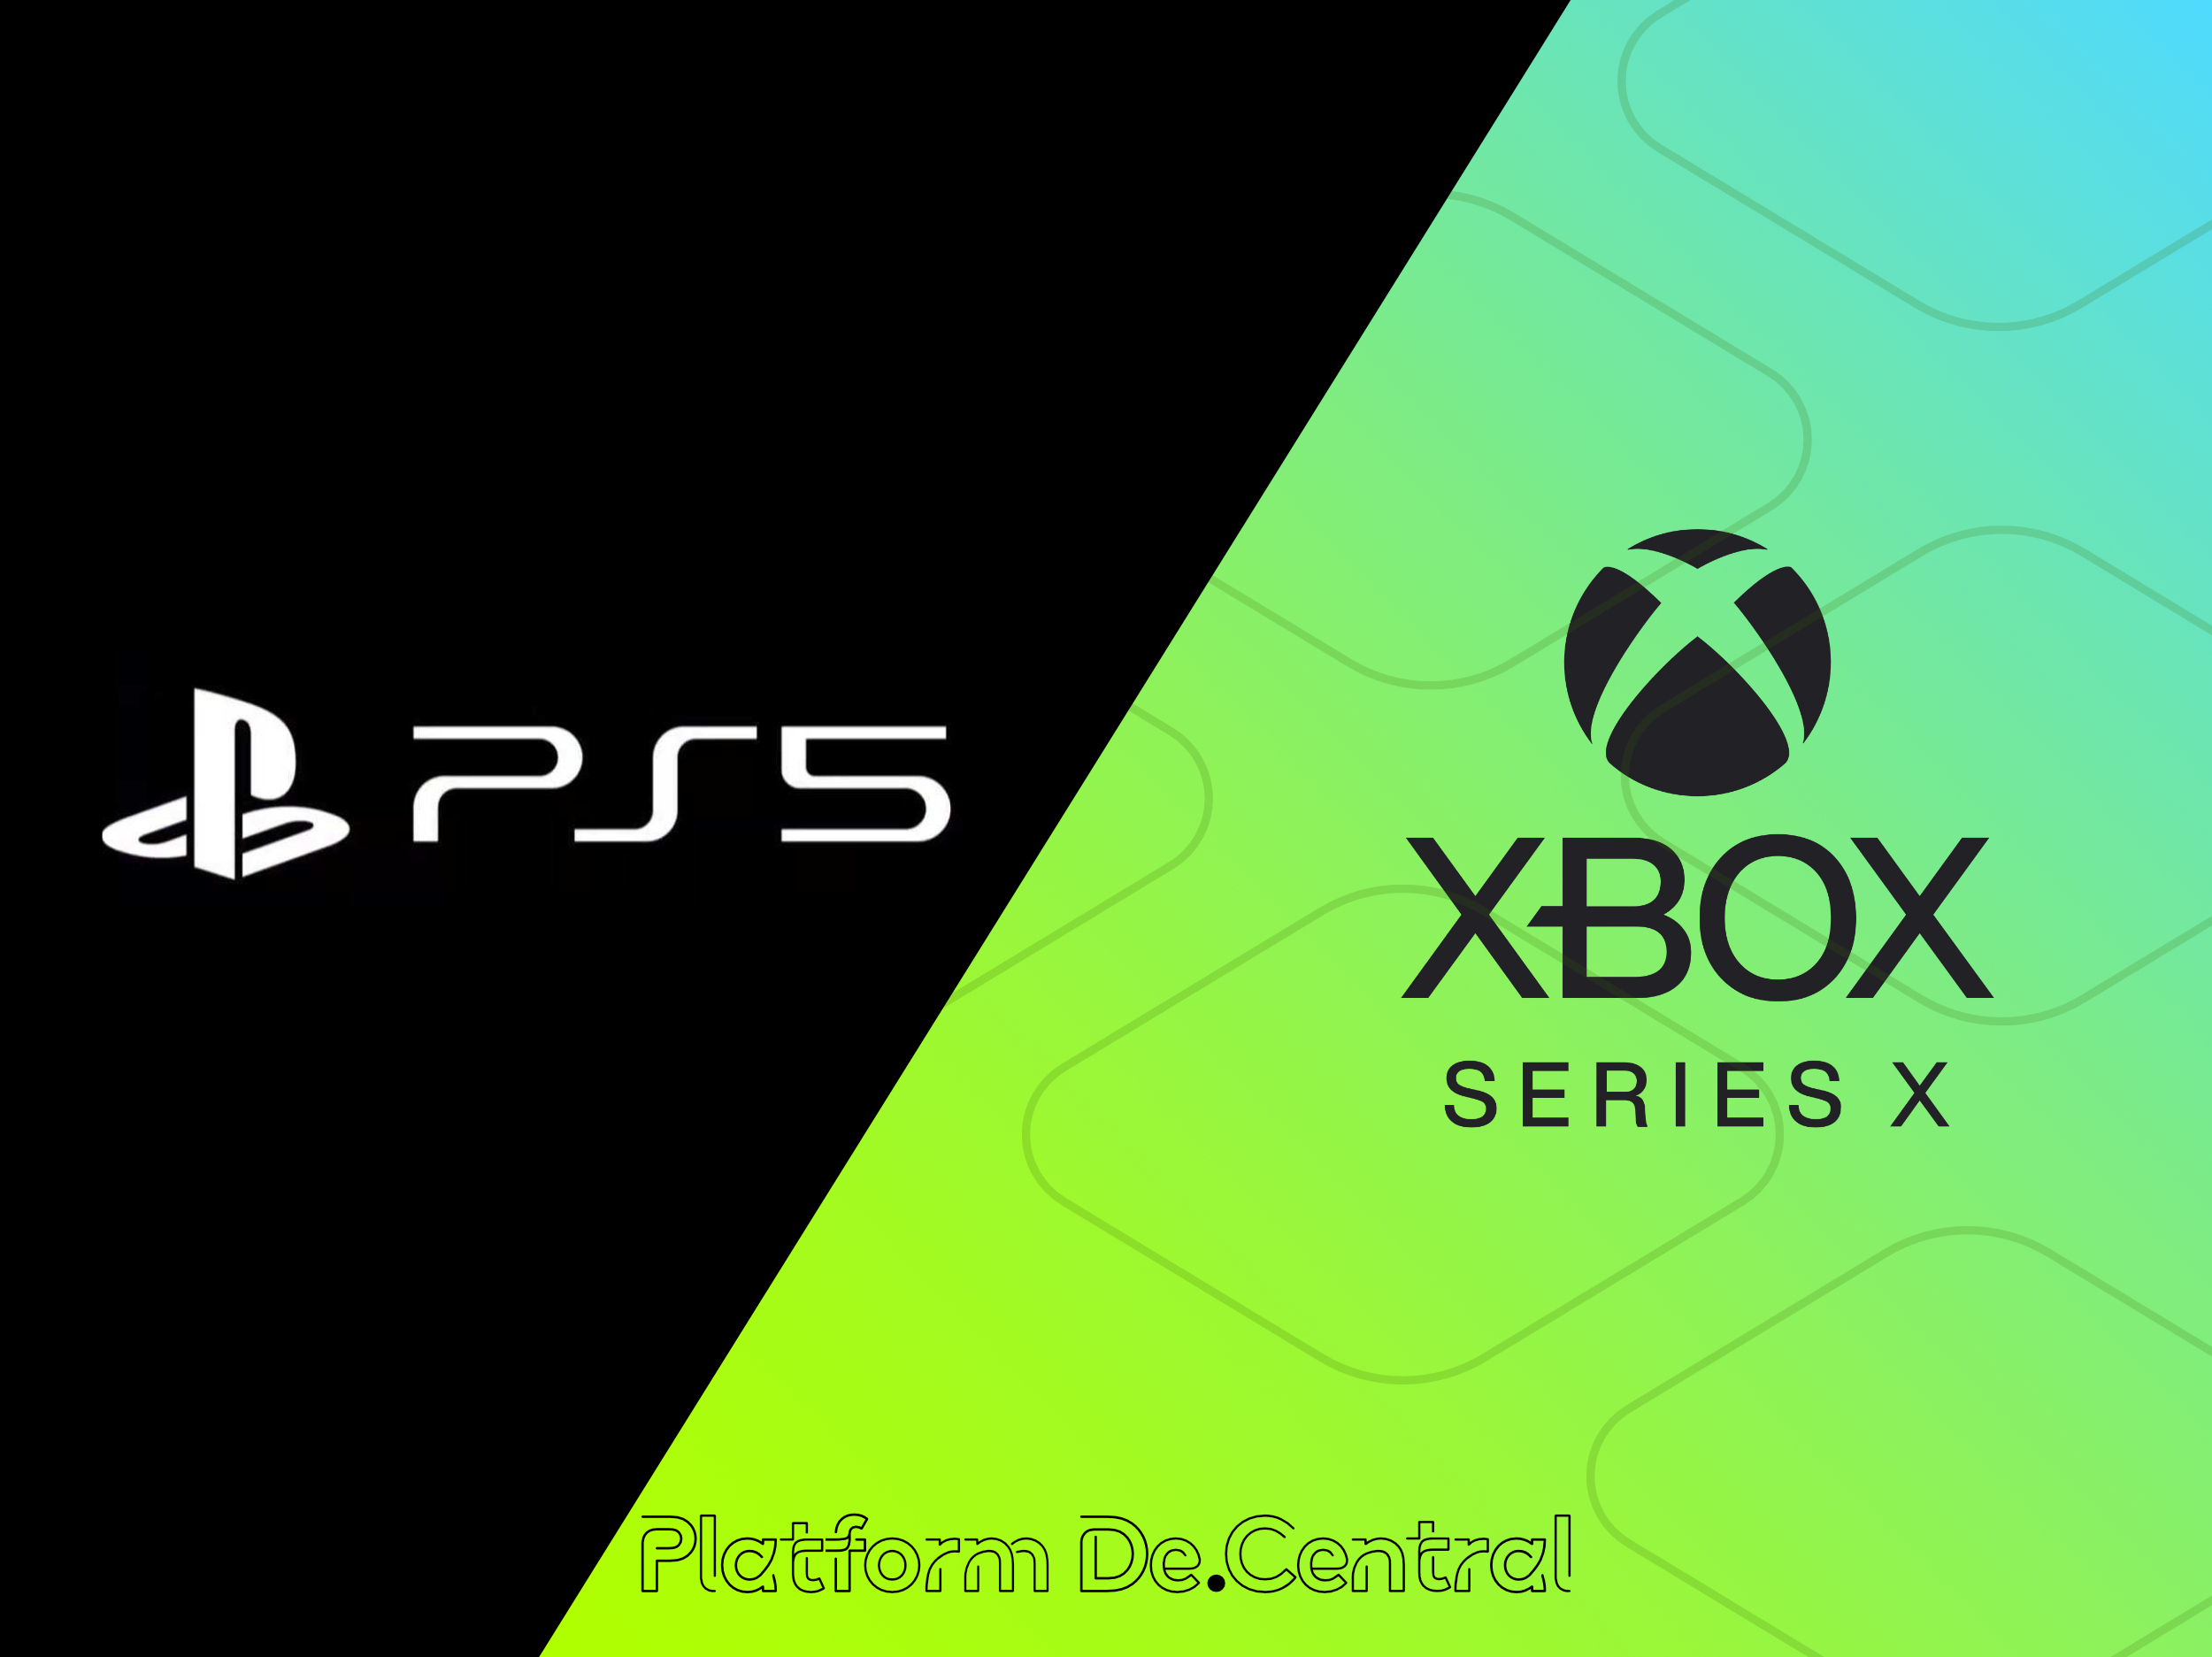 Sony Playstation 5 vs Xbox Series X specs